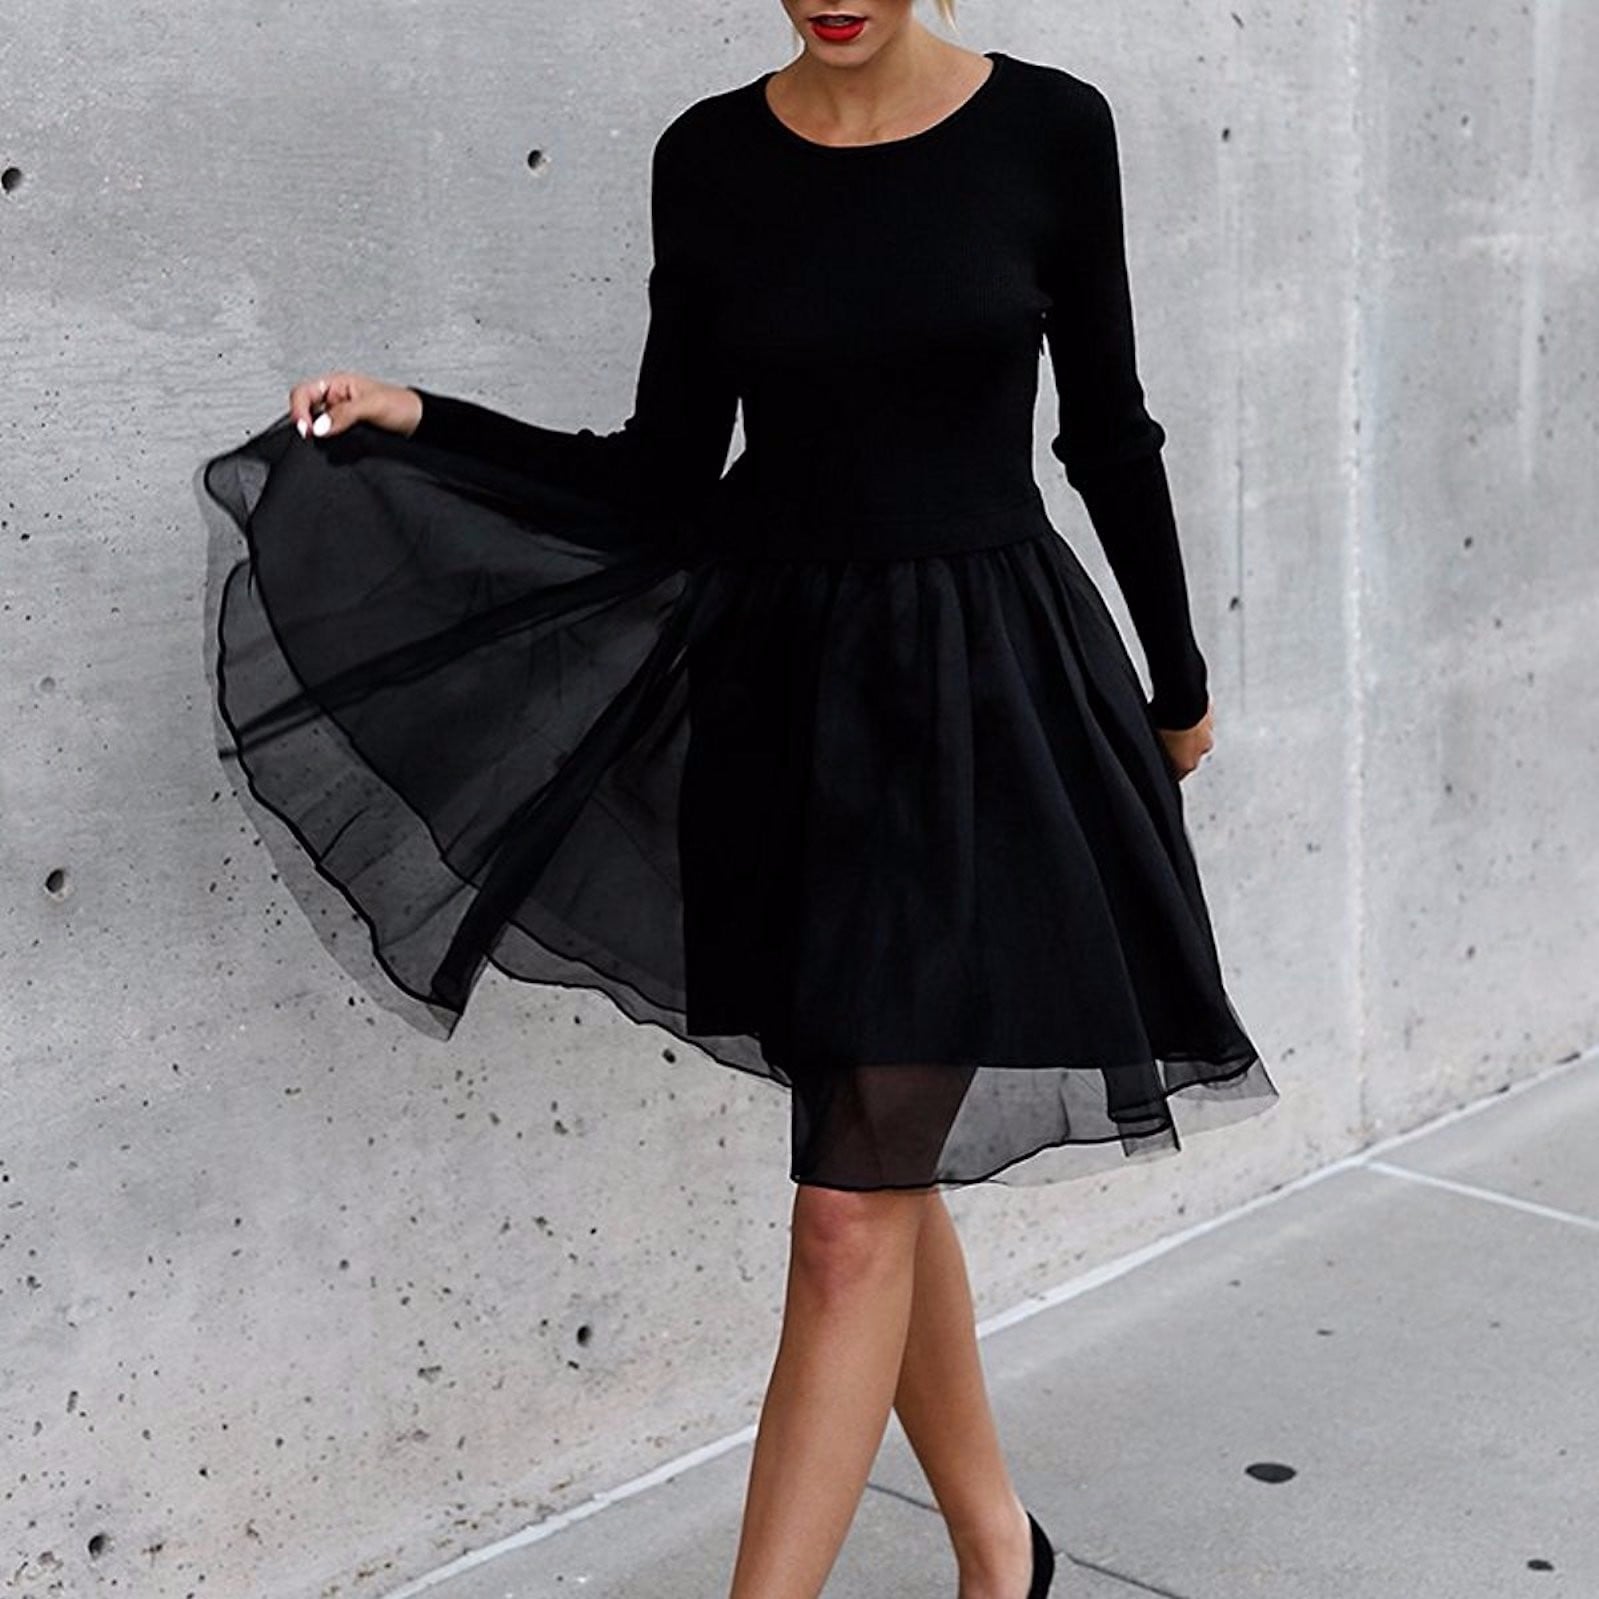 Black Dresses on Amazon | POPSUGAR Fashion